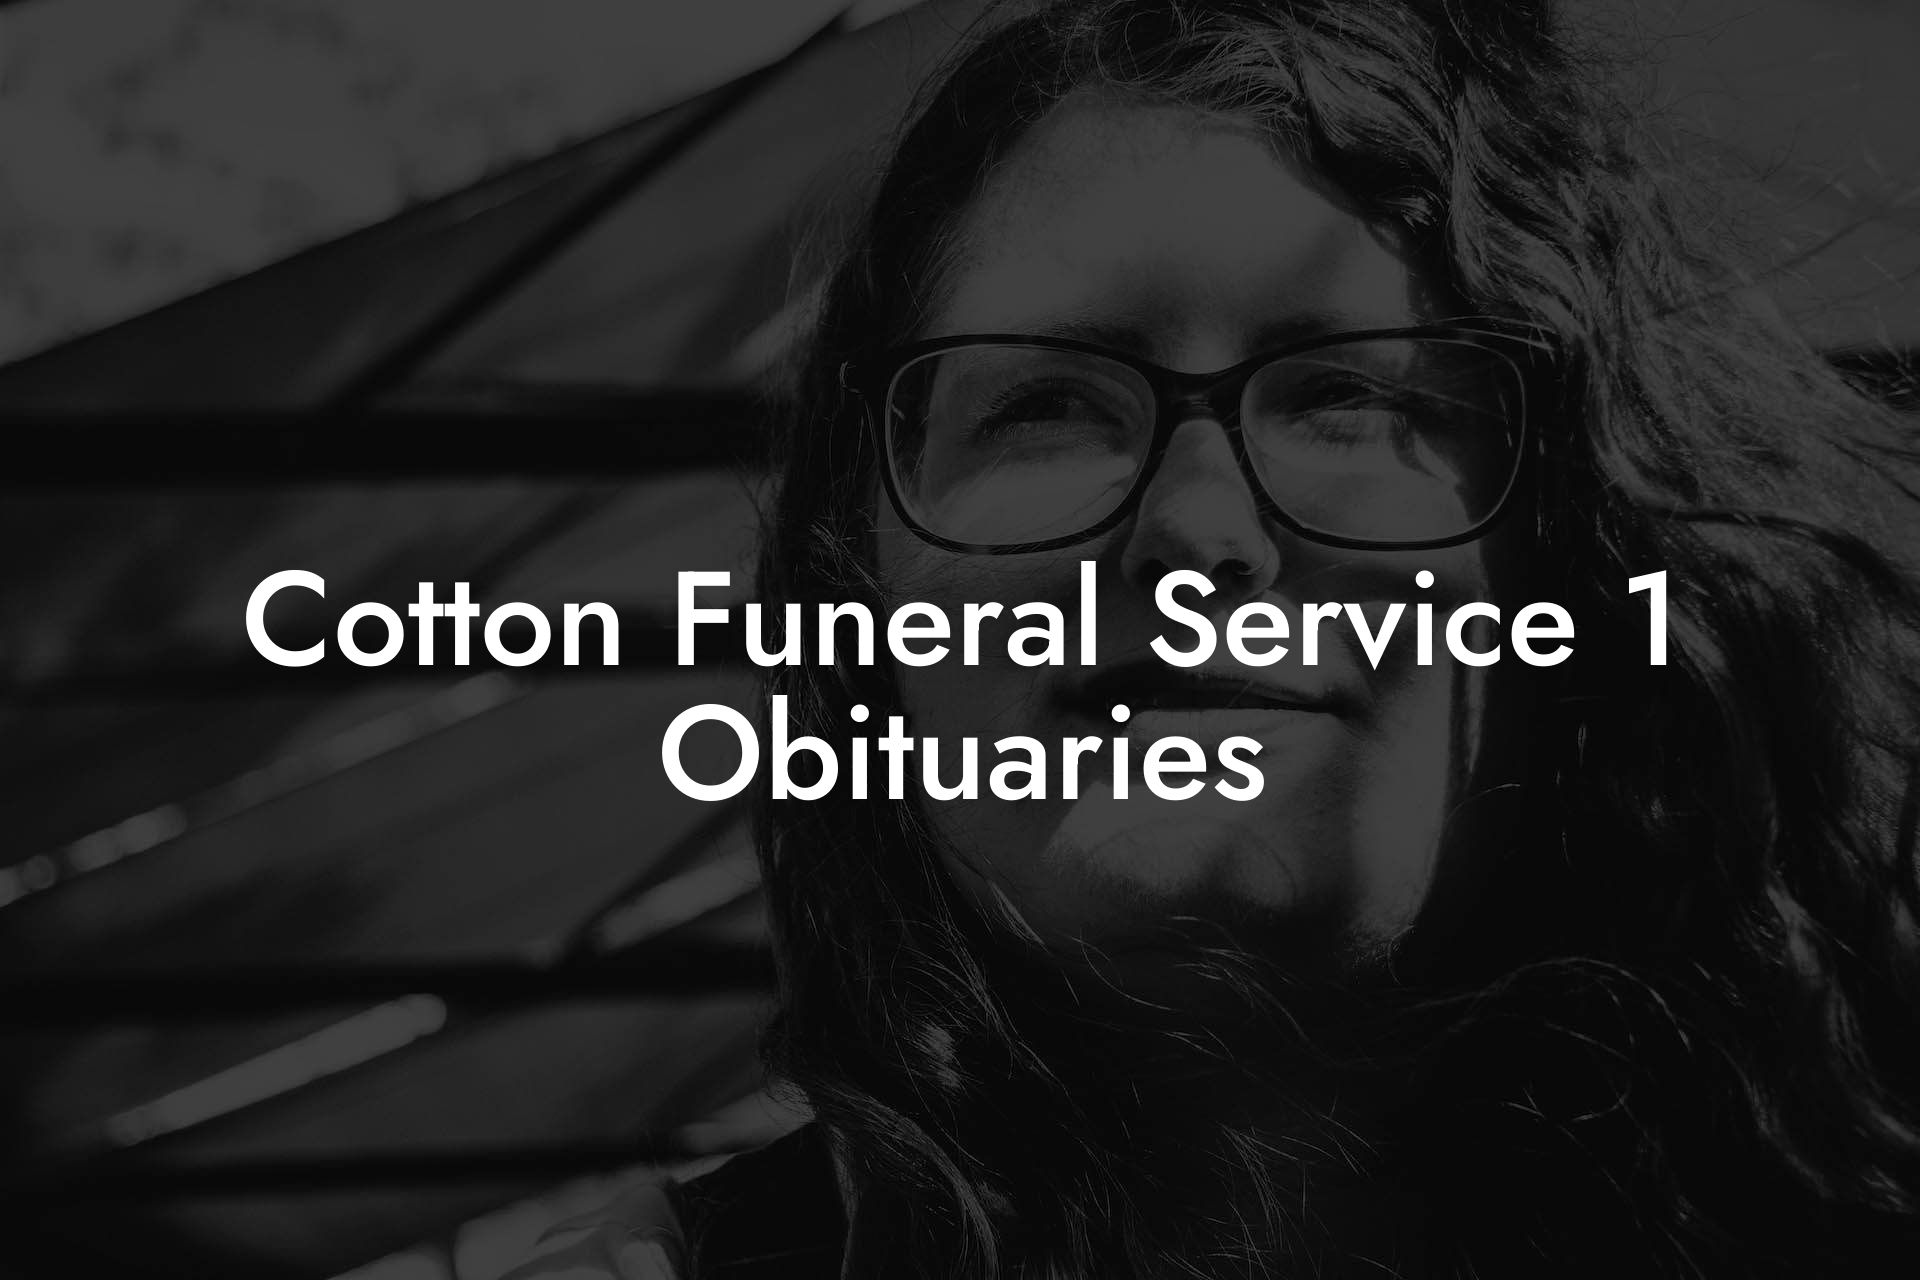 Cotton Funeral Service 1 Obituaries